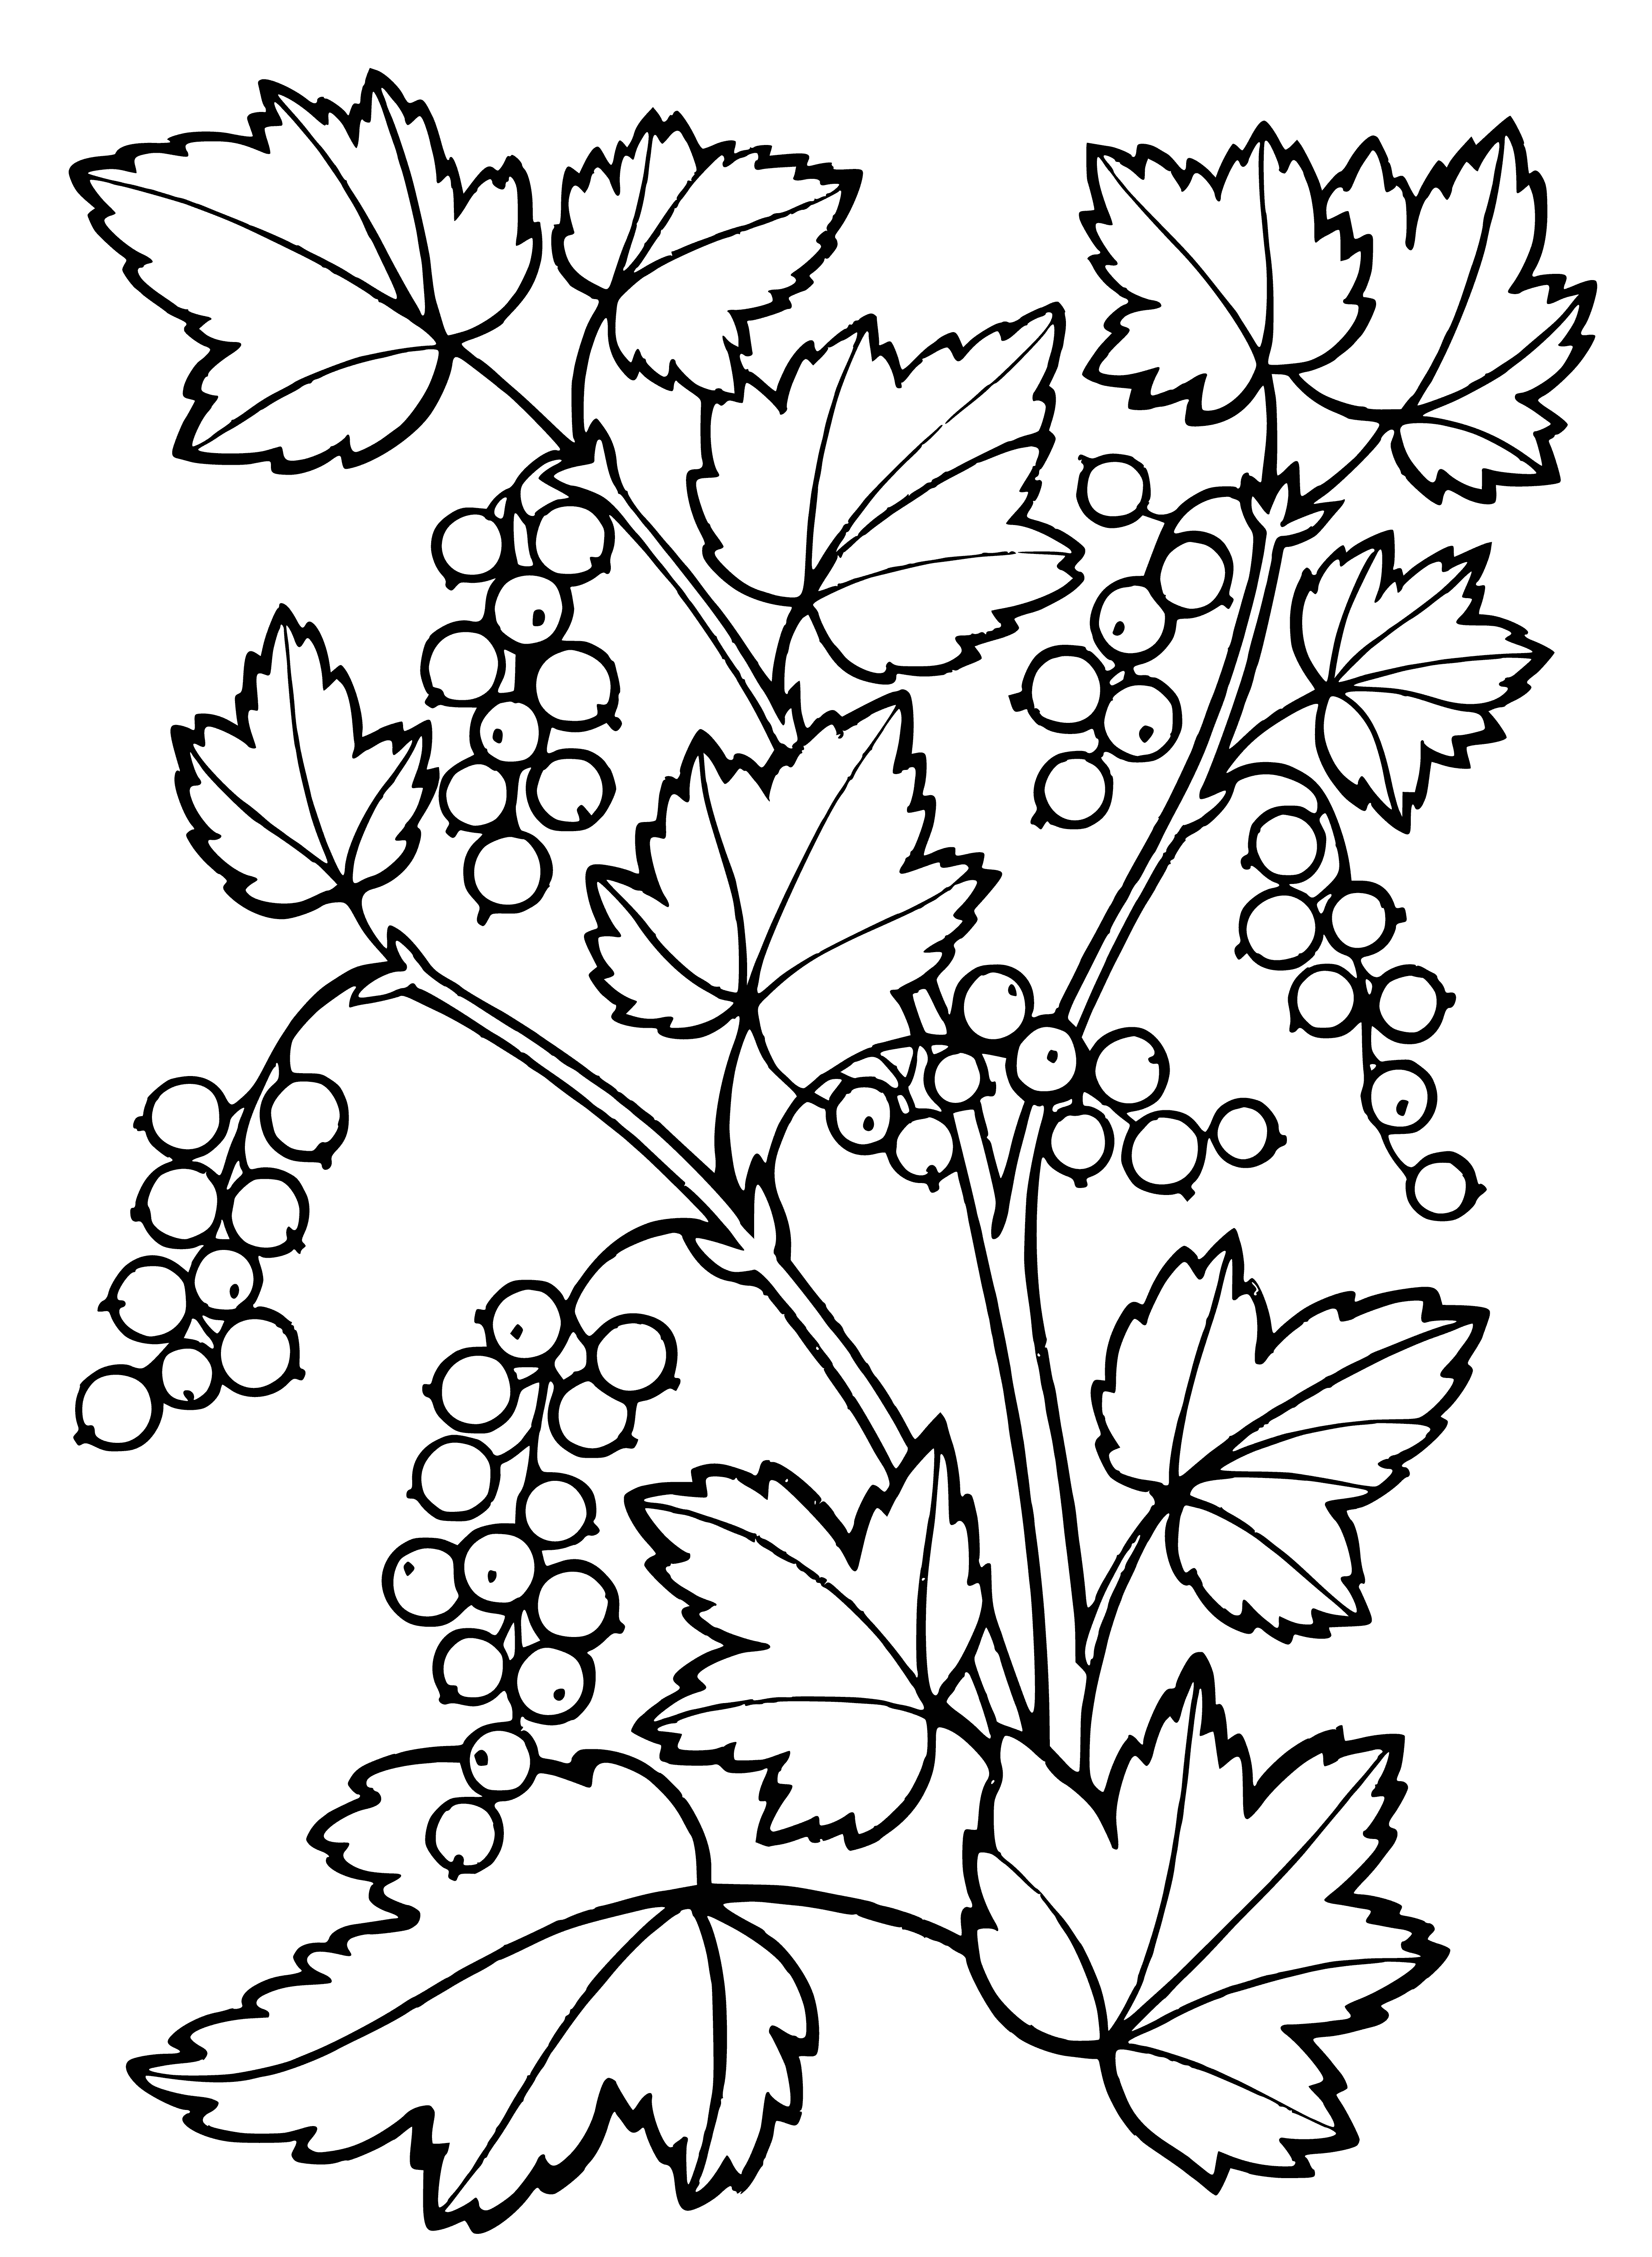 Currant bush coloring page